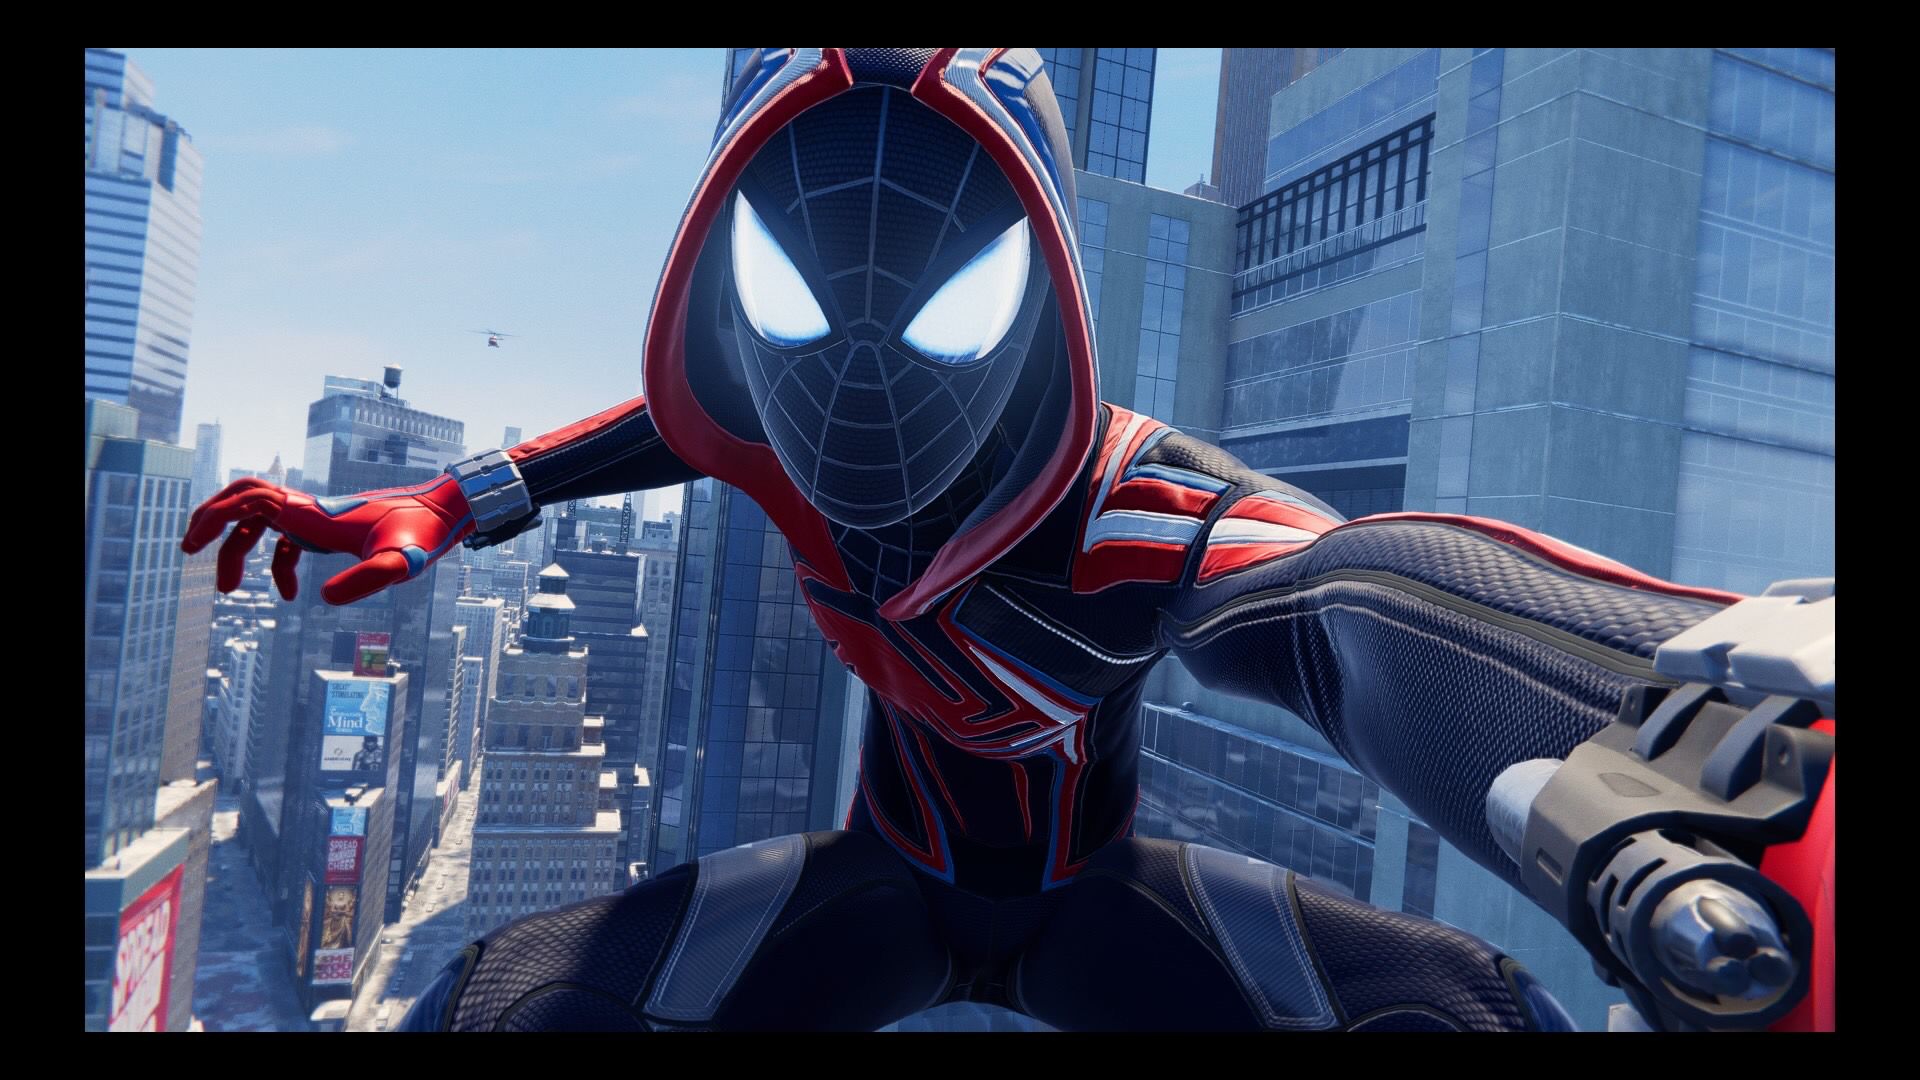 Spiderman miles morales 2099 suit | Fandom